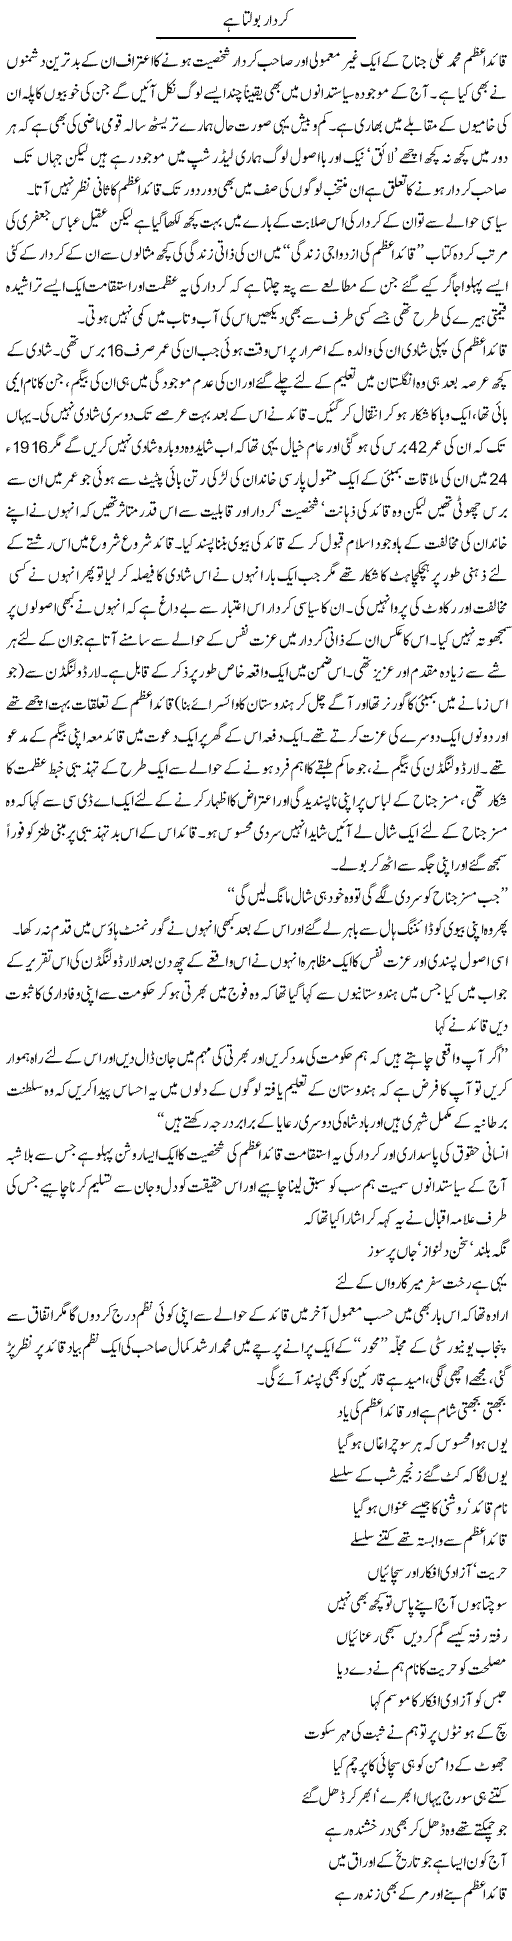 Character Speaks Express Column Amjad Islam 25 December 2010